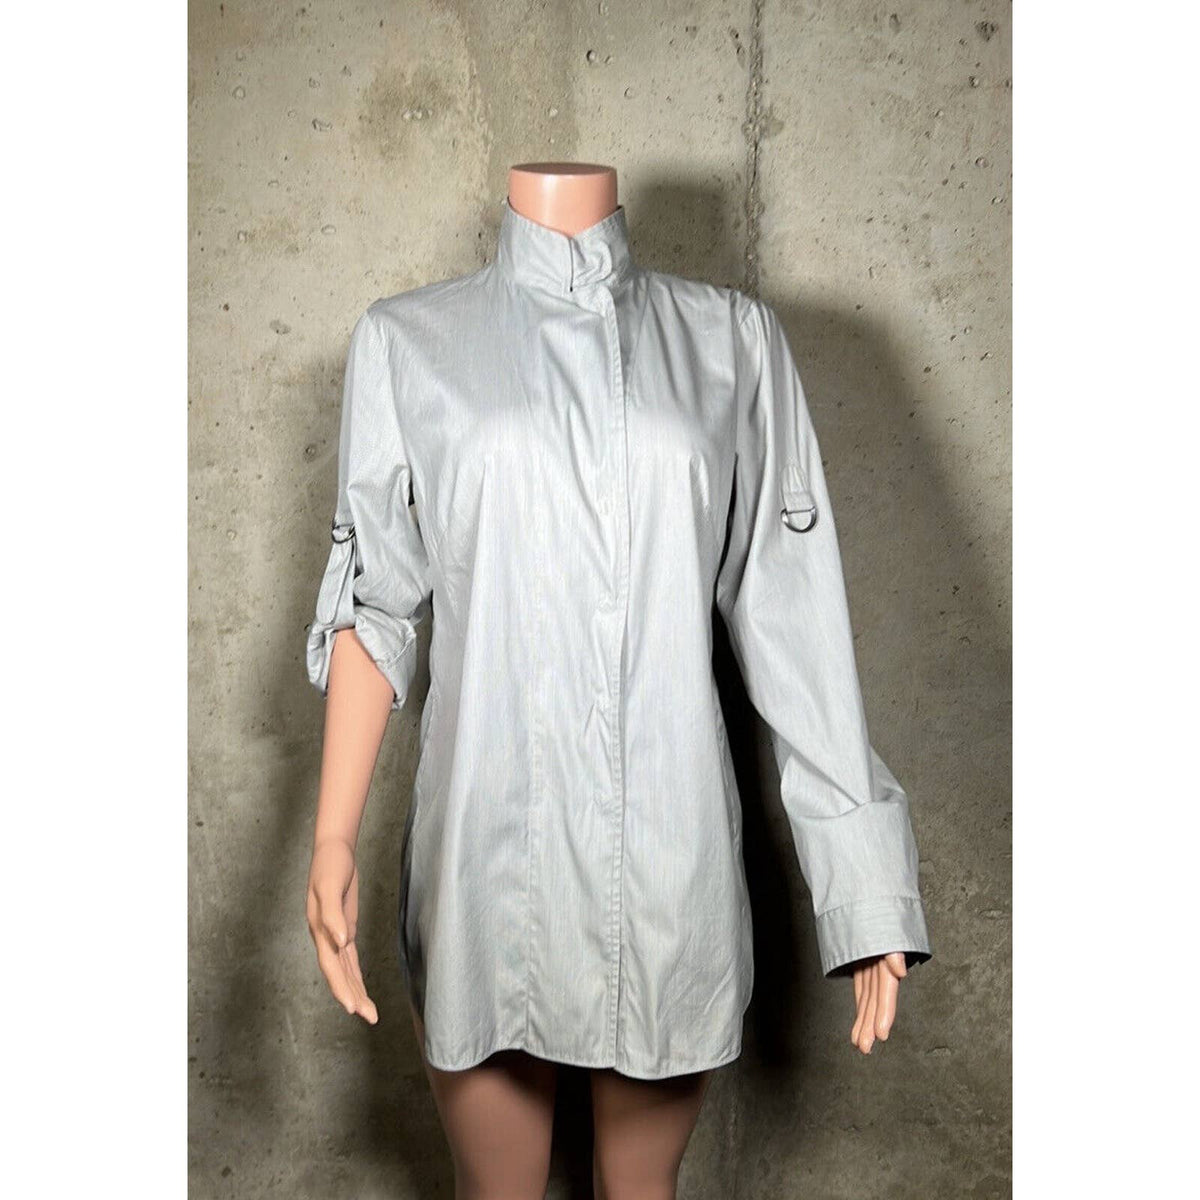 Akris Punto Grey Pinstriped Button-Up Shirt Sz.10